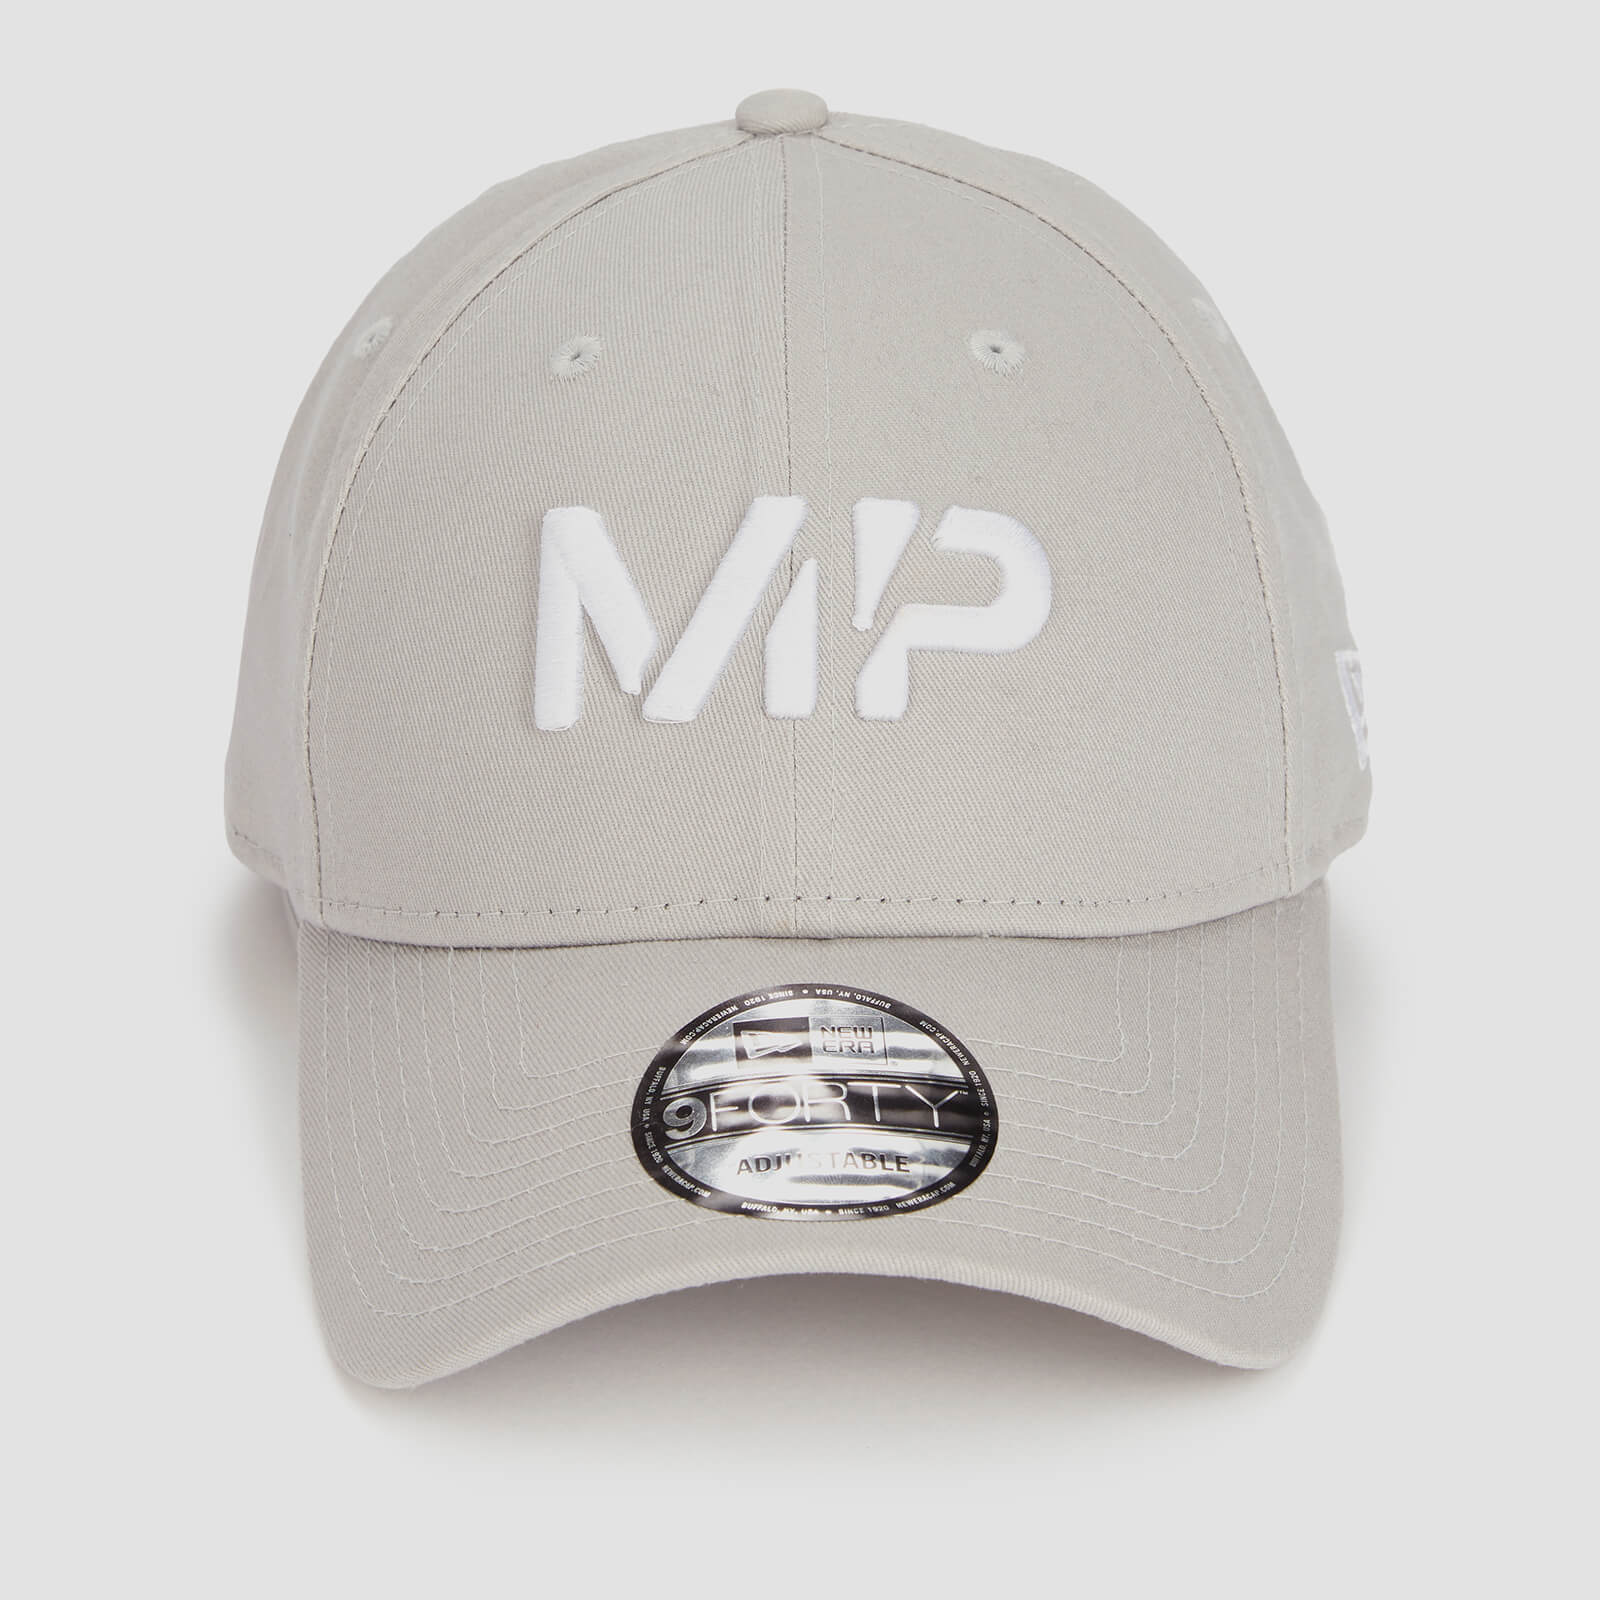 MP NEW ERA 9FORTY หมวกเบสบอล - Storm/White